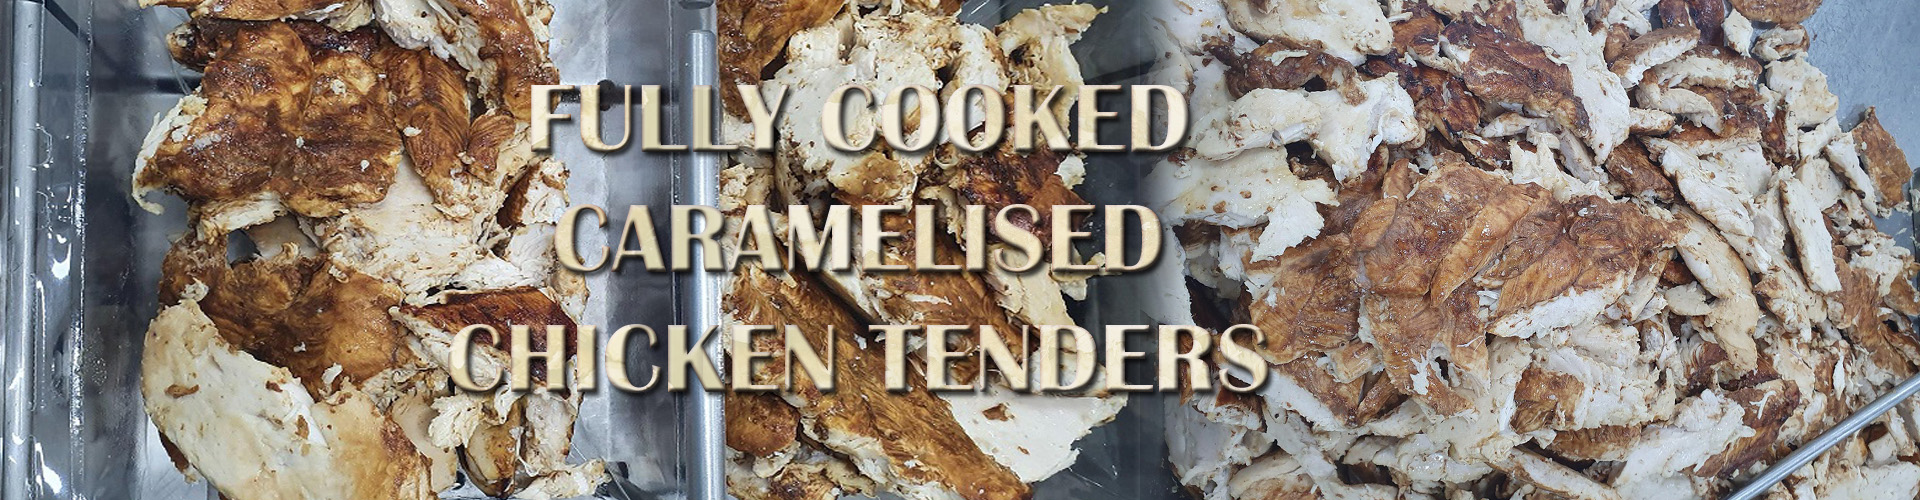 Chicken Tenders Image